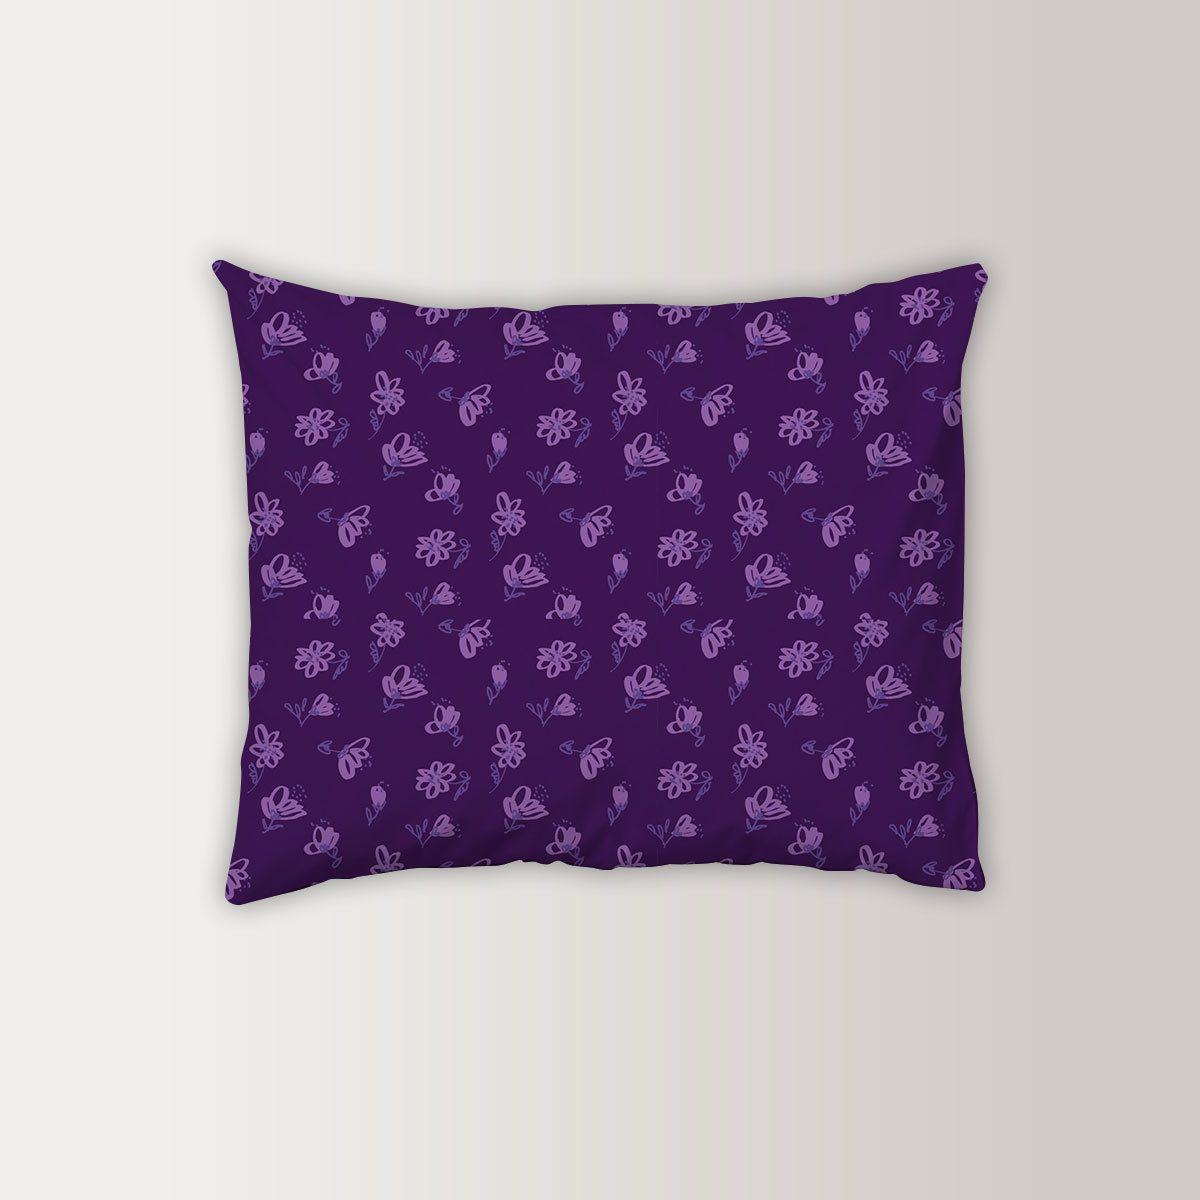 Vintage Violet Floral Seamless Pattern Pillow Case